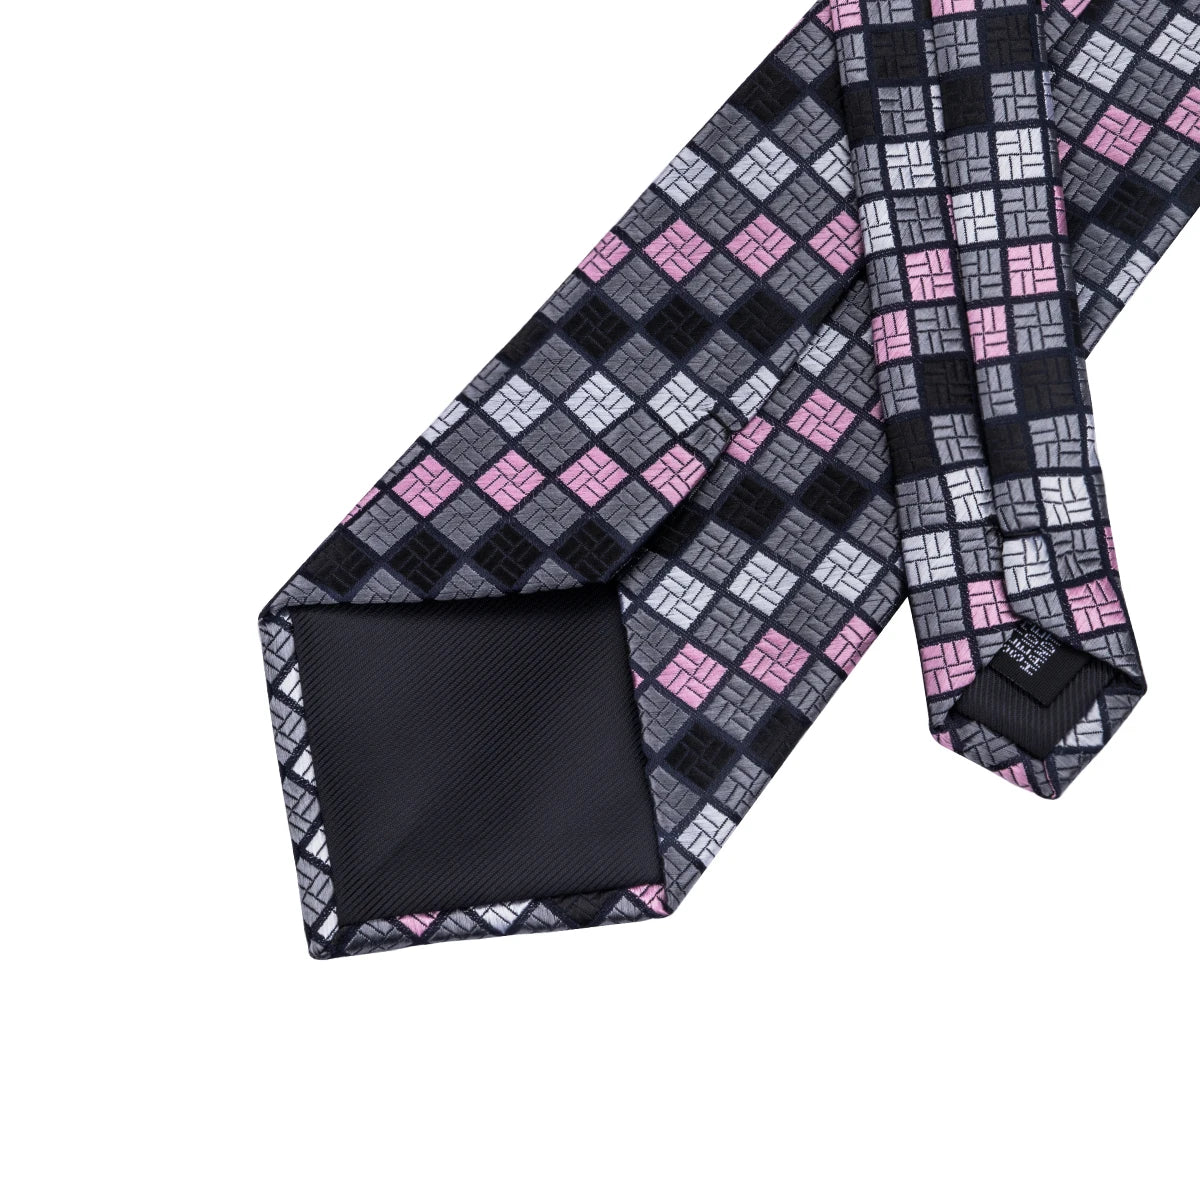 Luxury Hi-Tie 100% Silk Paisley Grey Plaid Novelty Necktie with Pocket Square and Cufflinks Set